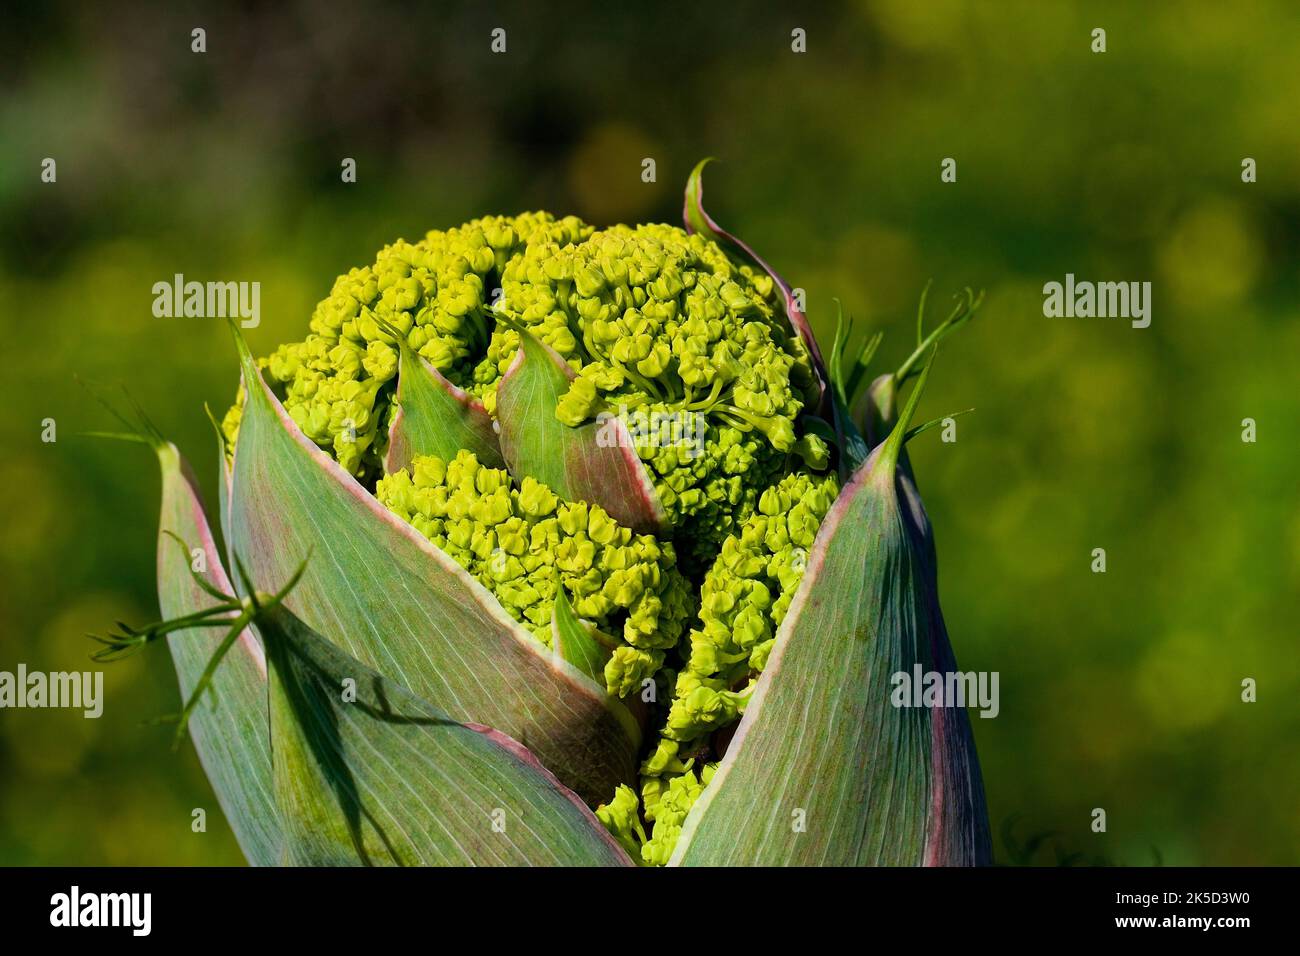 Italy, Sicily, Zingaro National Park, spring, macro, single calyx, small yellow flowers, background blurred Stock Photo